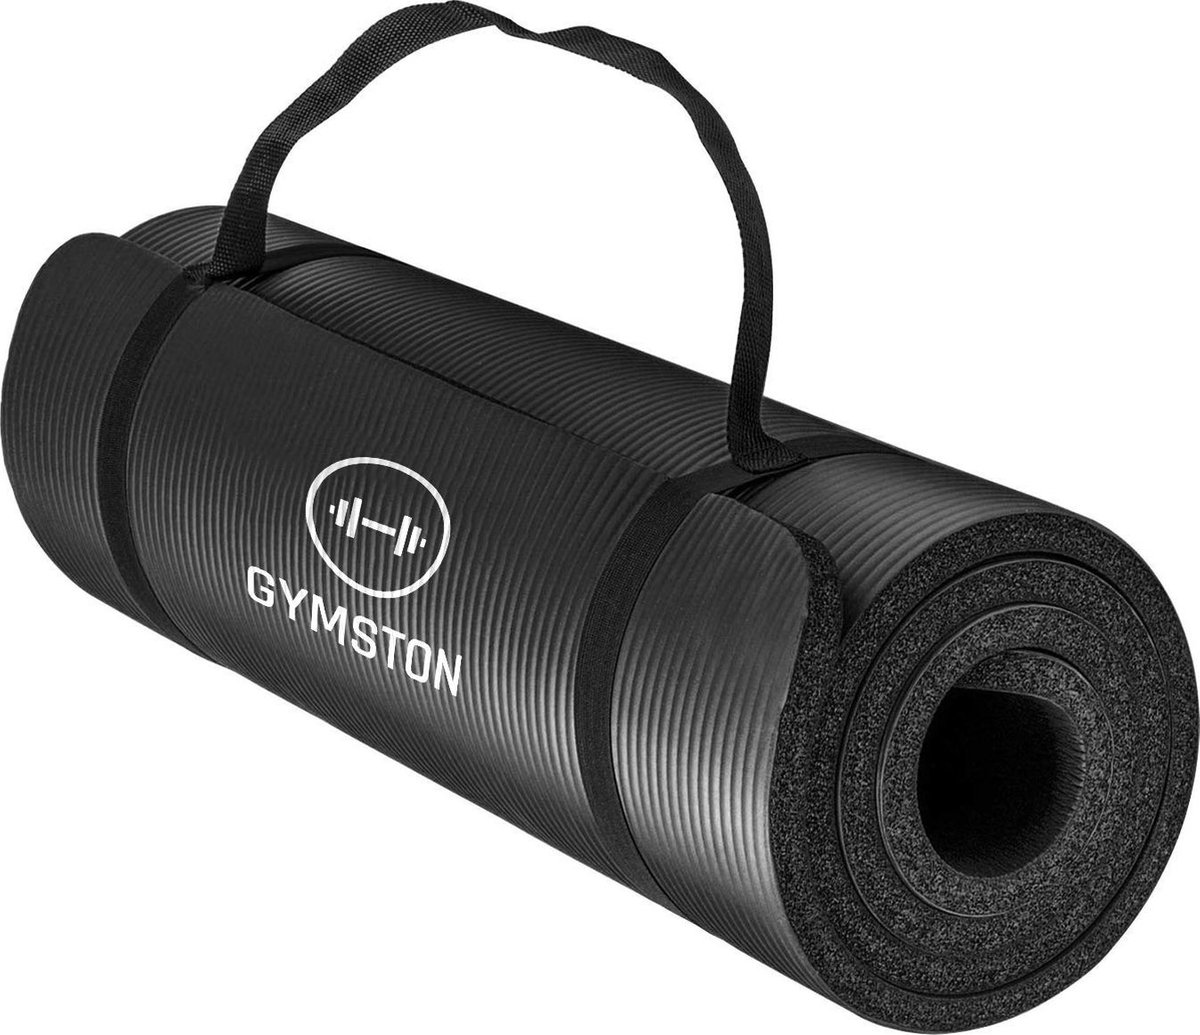 Gymston fitnessmat